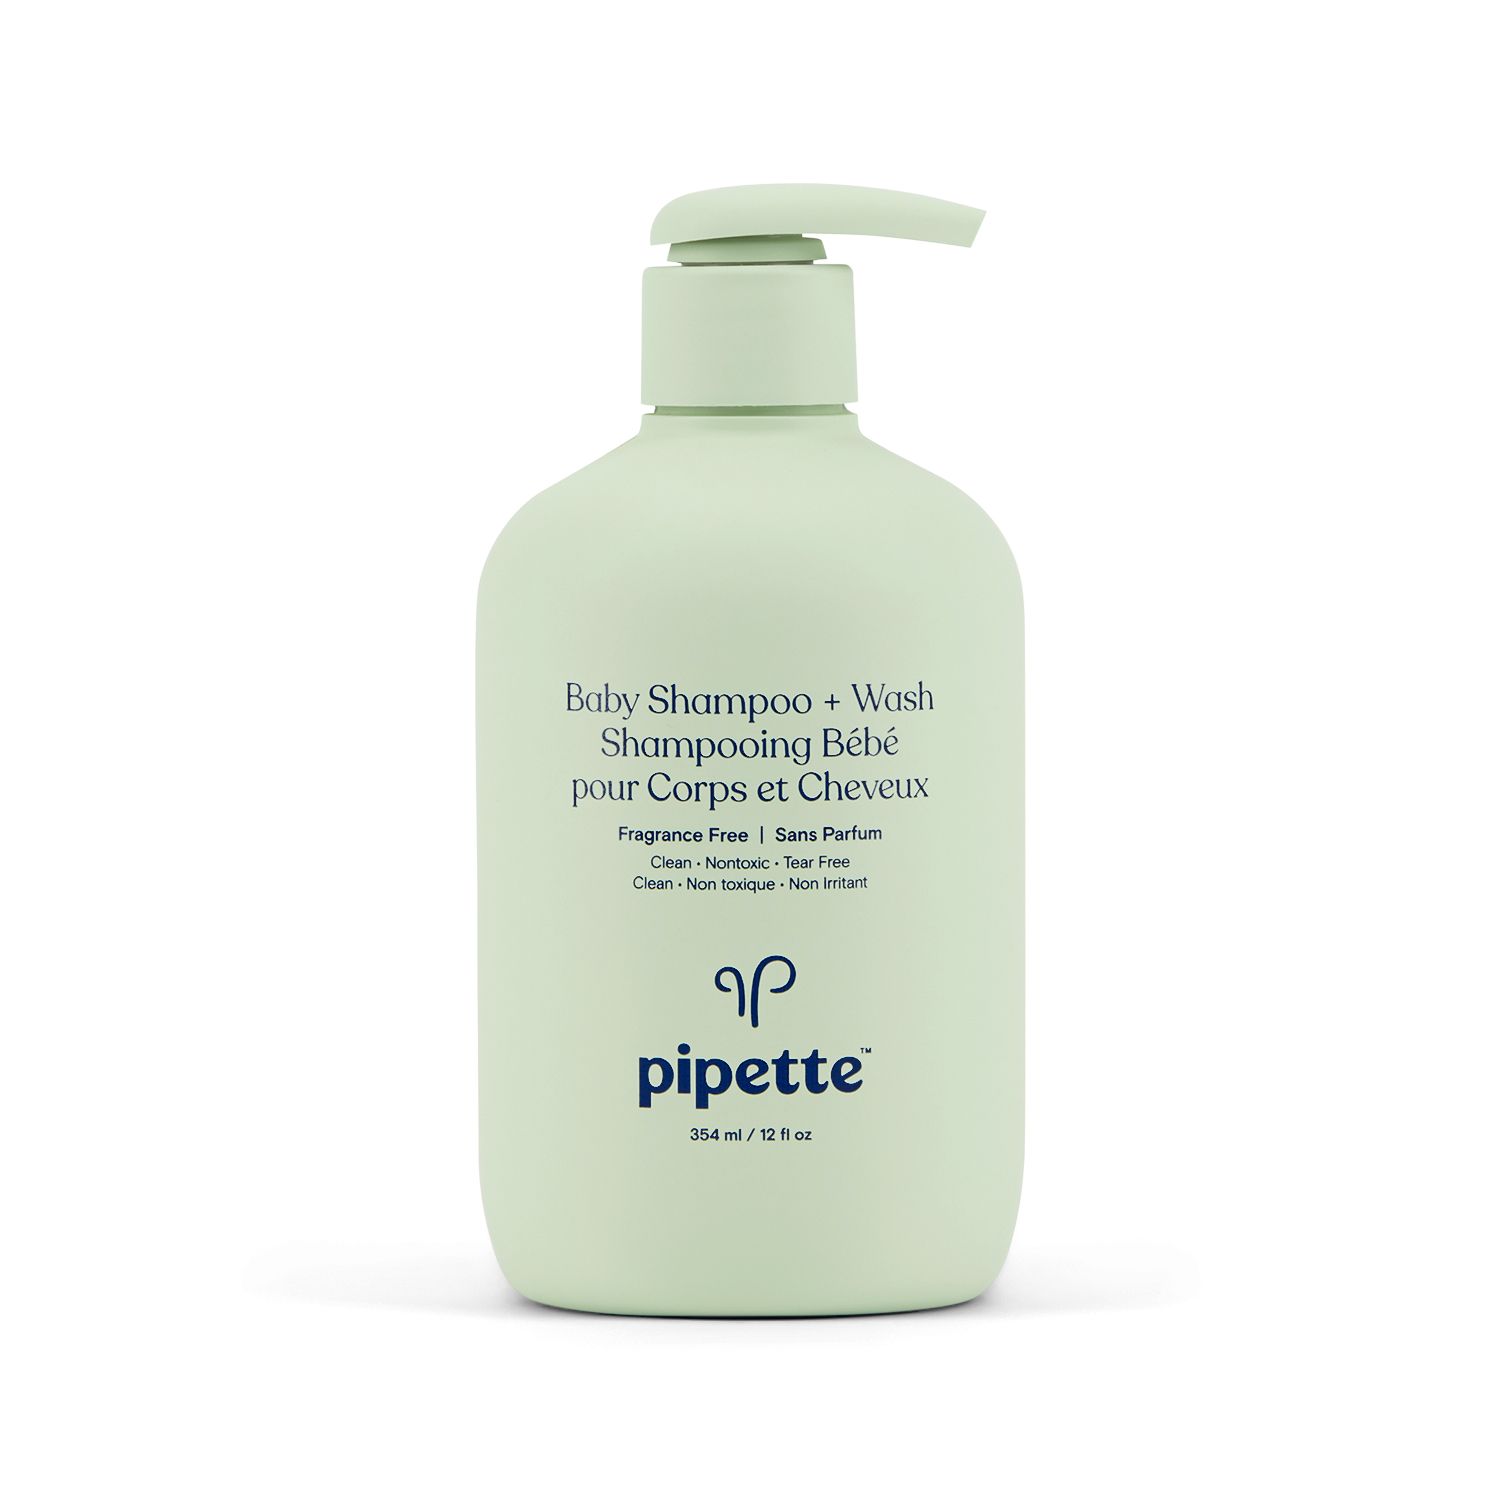 DISCPipette Baby Shampoo + Wash, Fragrance Free - 12 fl oz